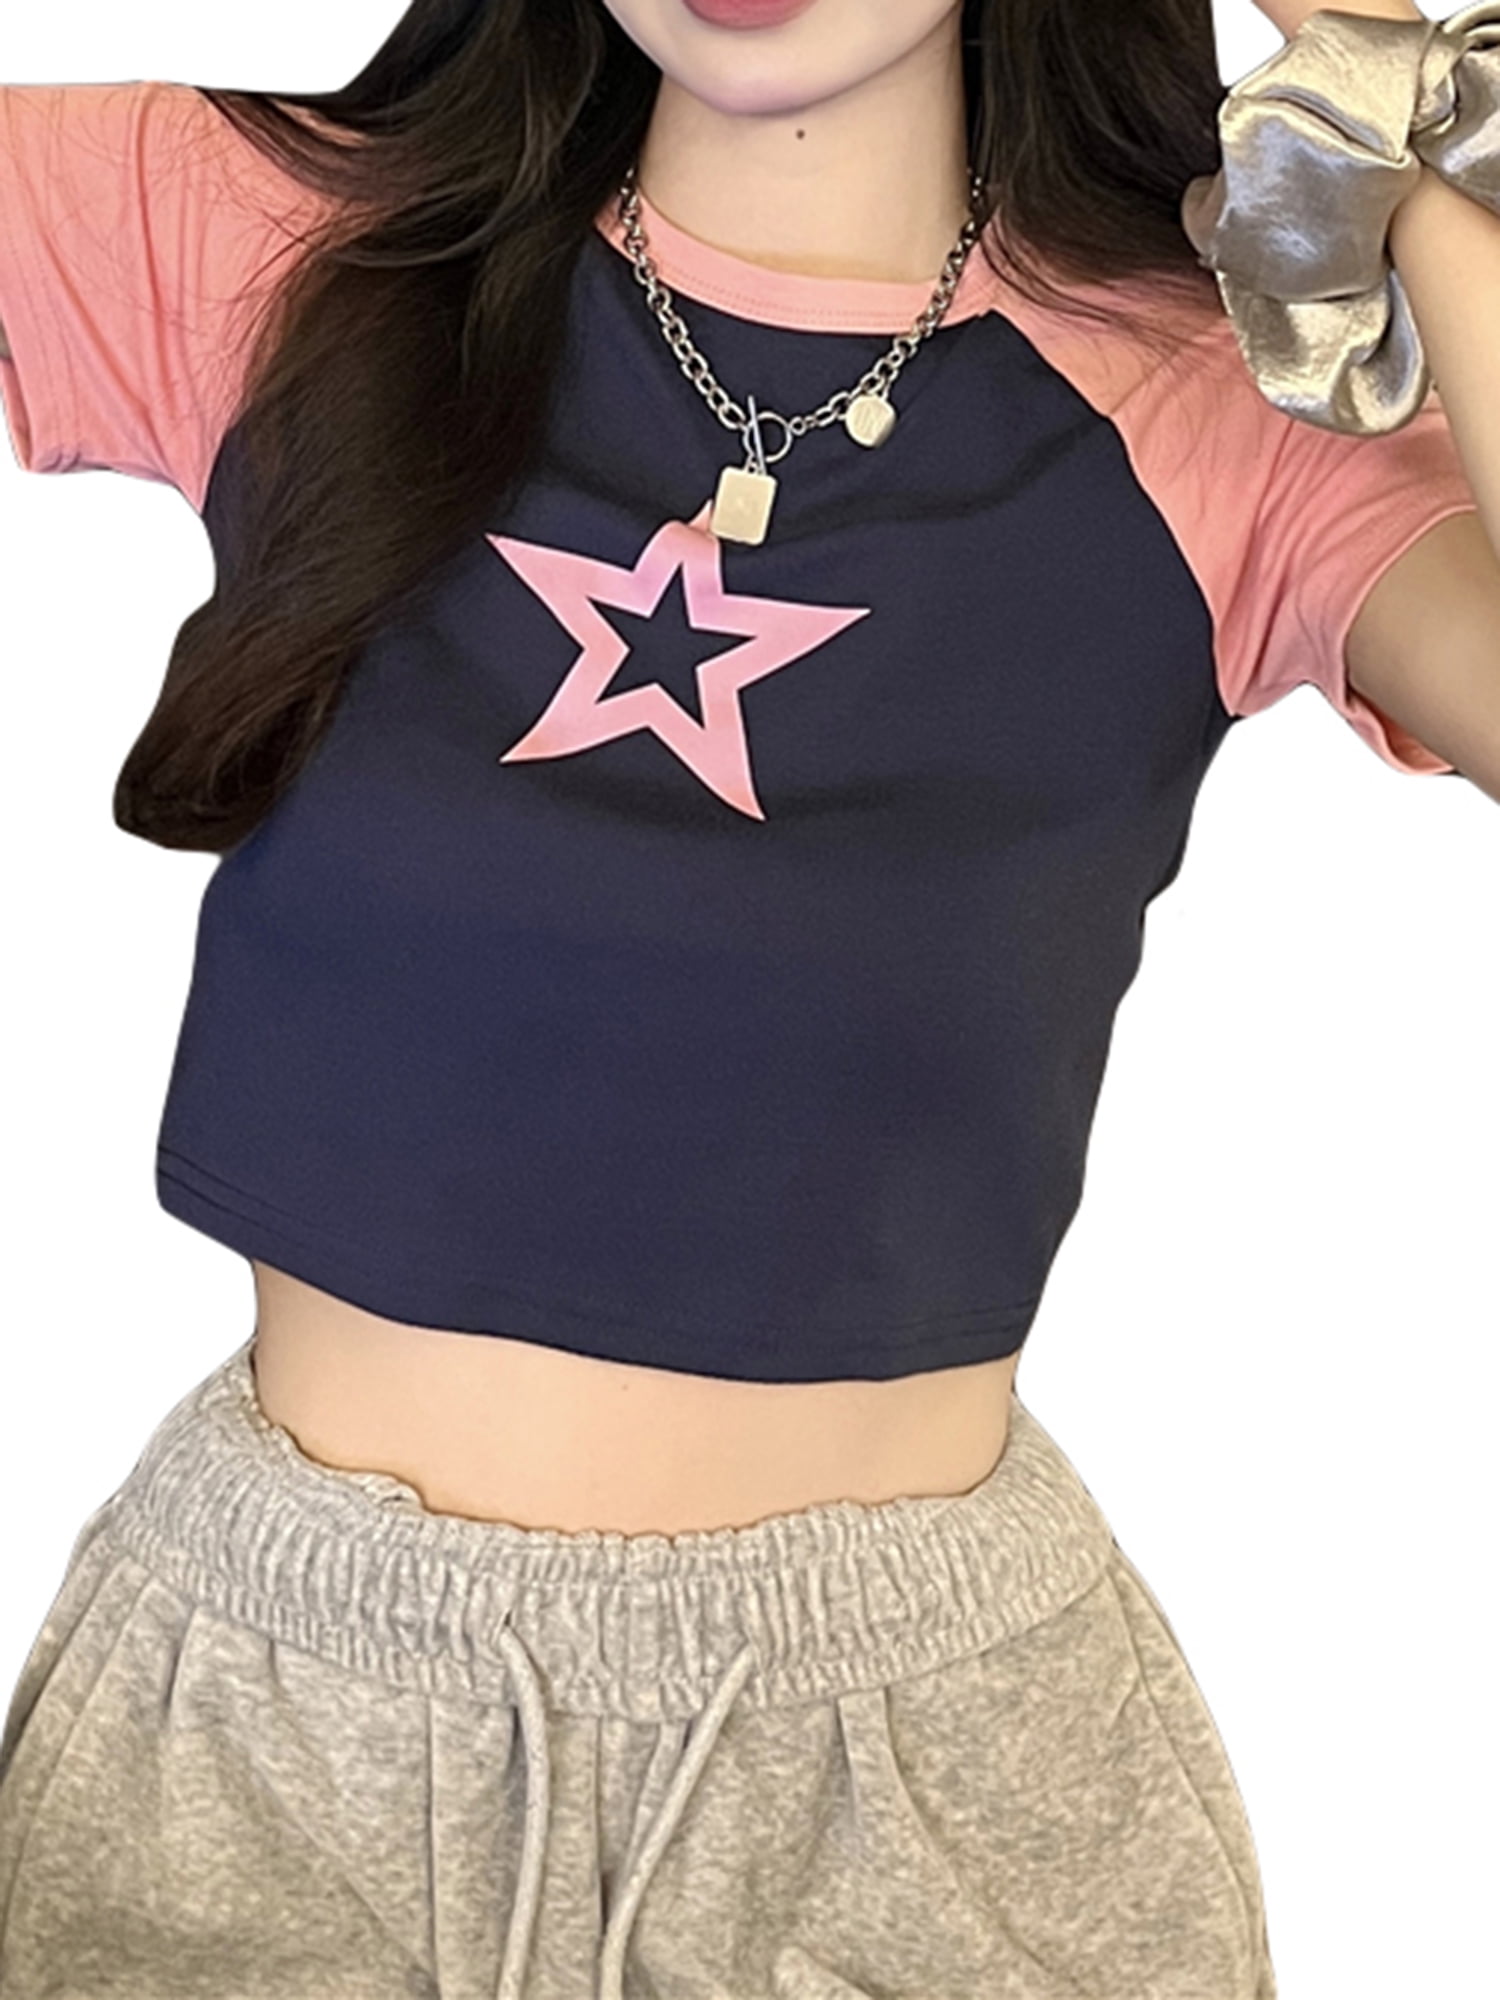 Women Teen Girls Vintage Aesthetic Tees Shirts Cute Graphic Star Print Crop  Tops Y2k Fairy Grunge Trendy Clothes 